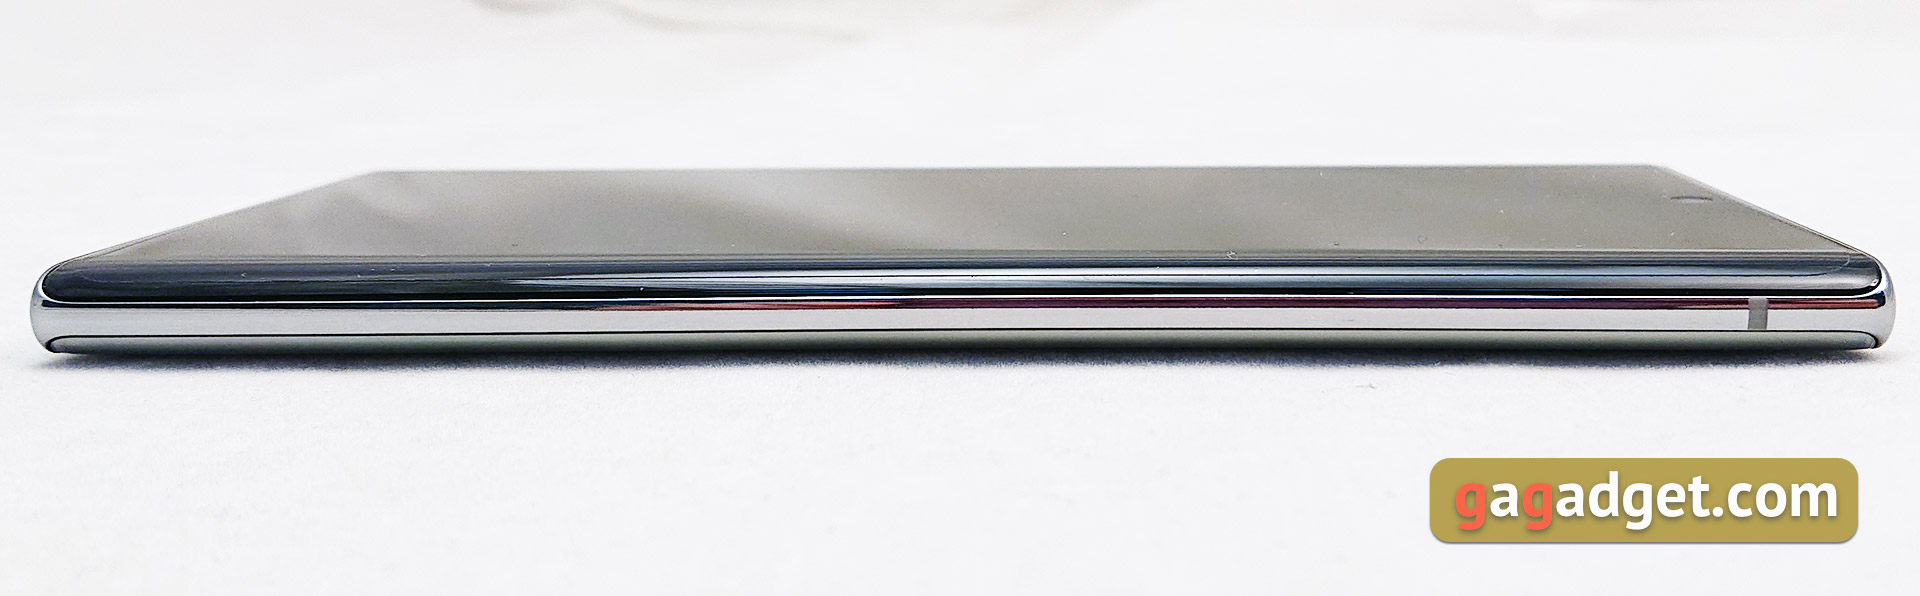 Обзор Samsung Galaxy Note10: всё тот же флагман, но поменьше-9